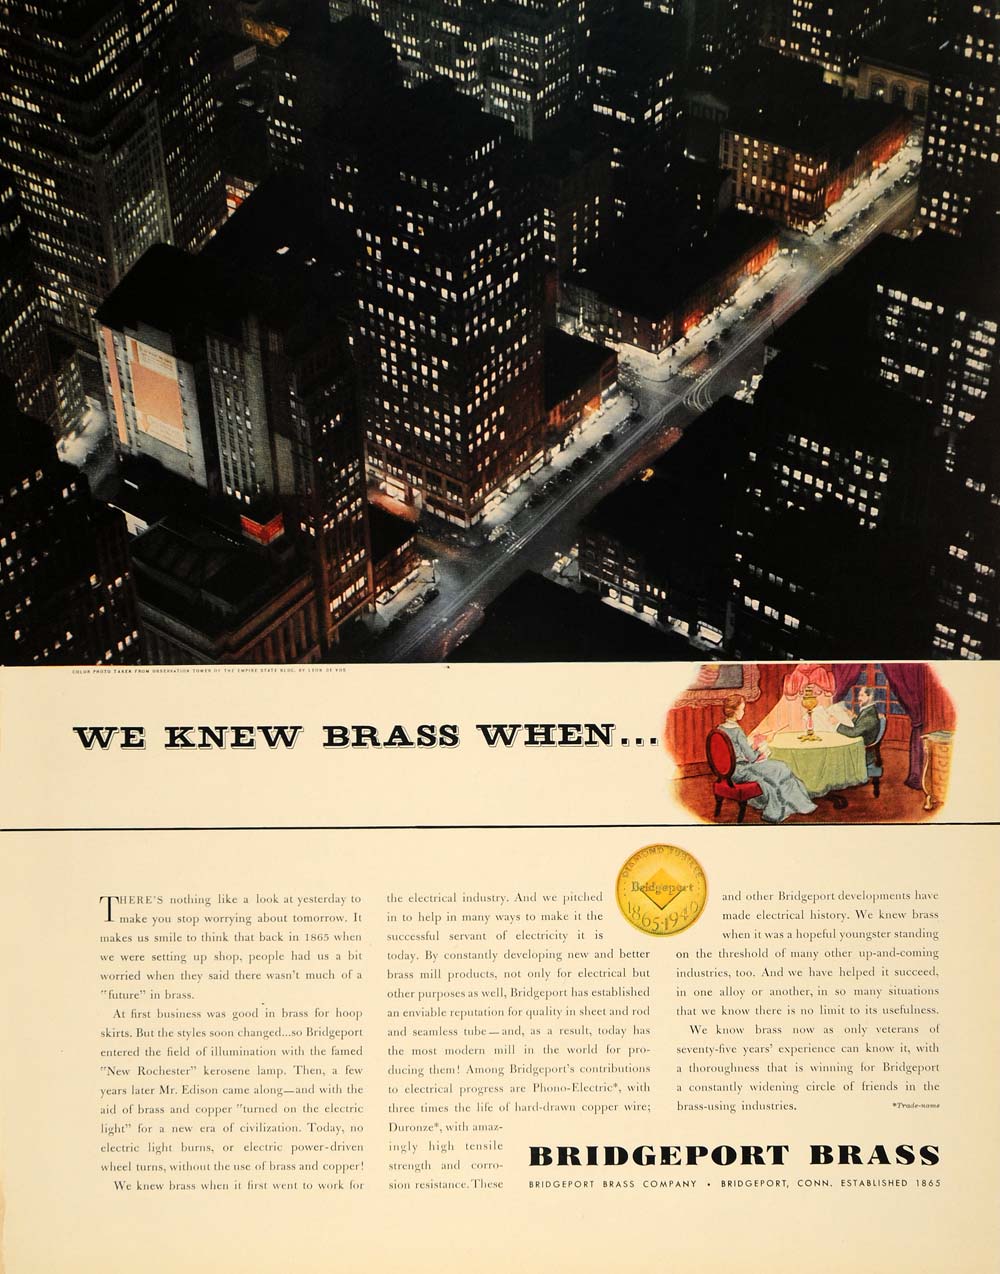 1940 Ad Bridgeport Brass Empire State Building New York - ORIGINAL F4A